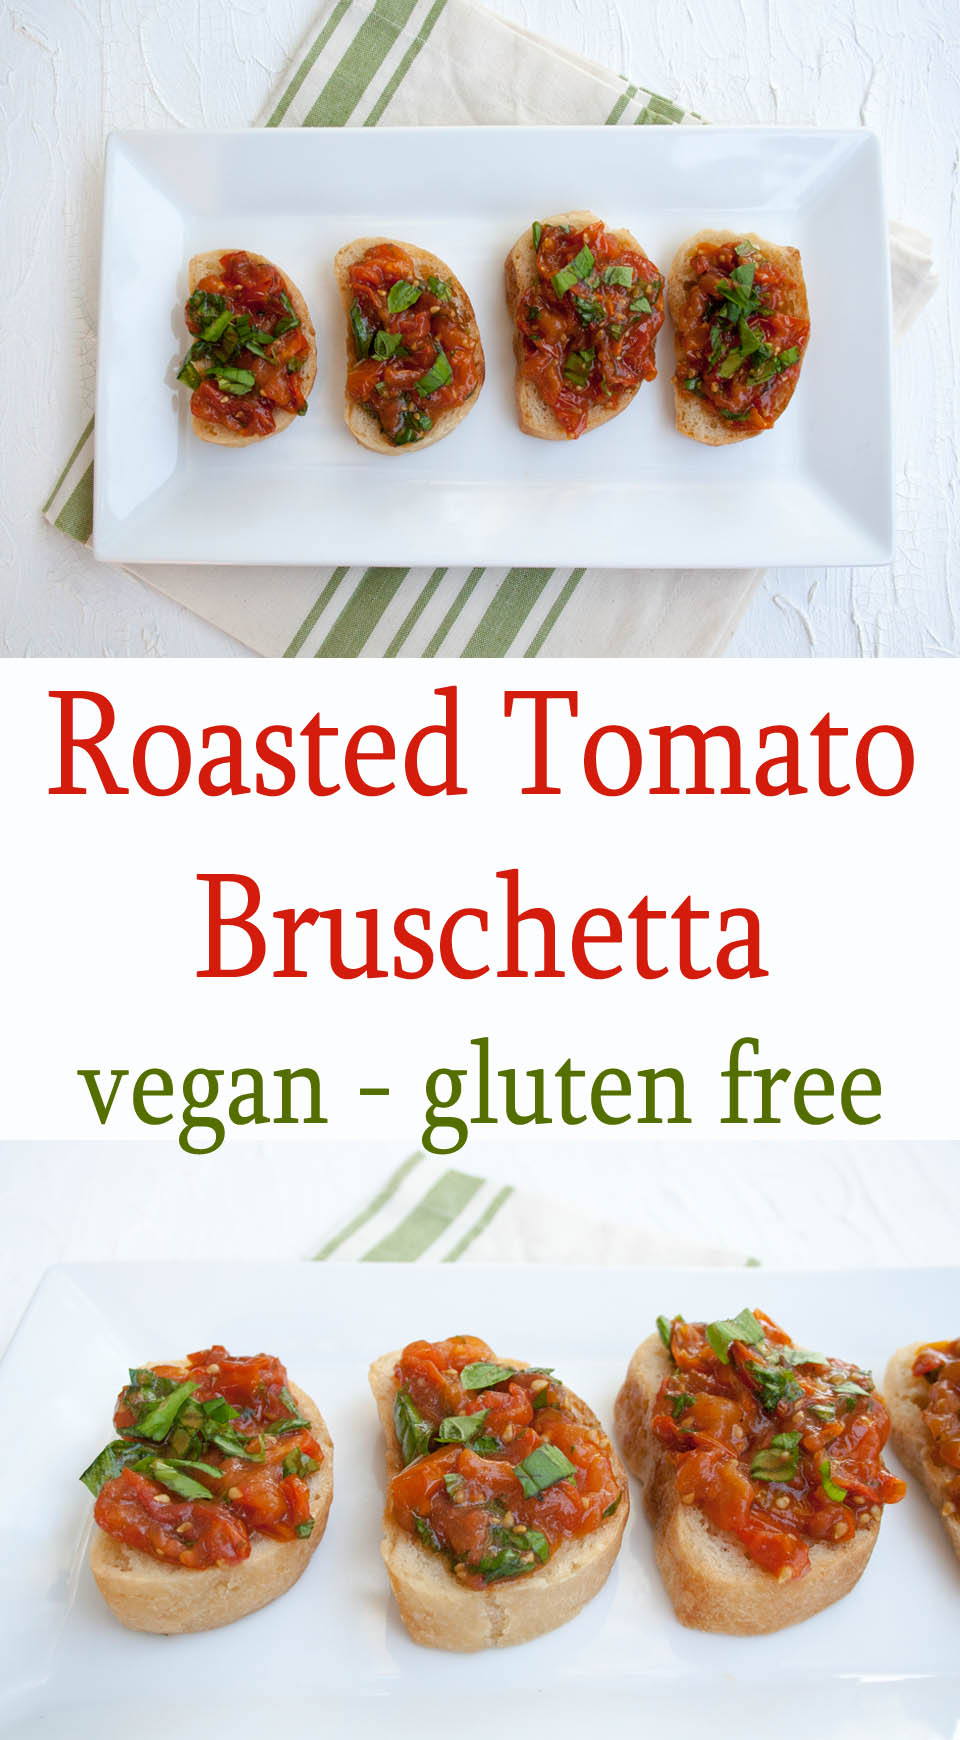 Roasted Tomato Bruschetta collage photo with text.